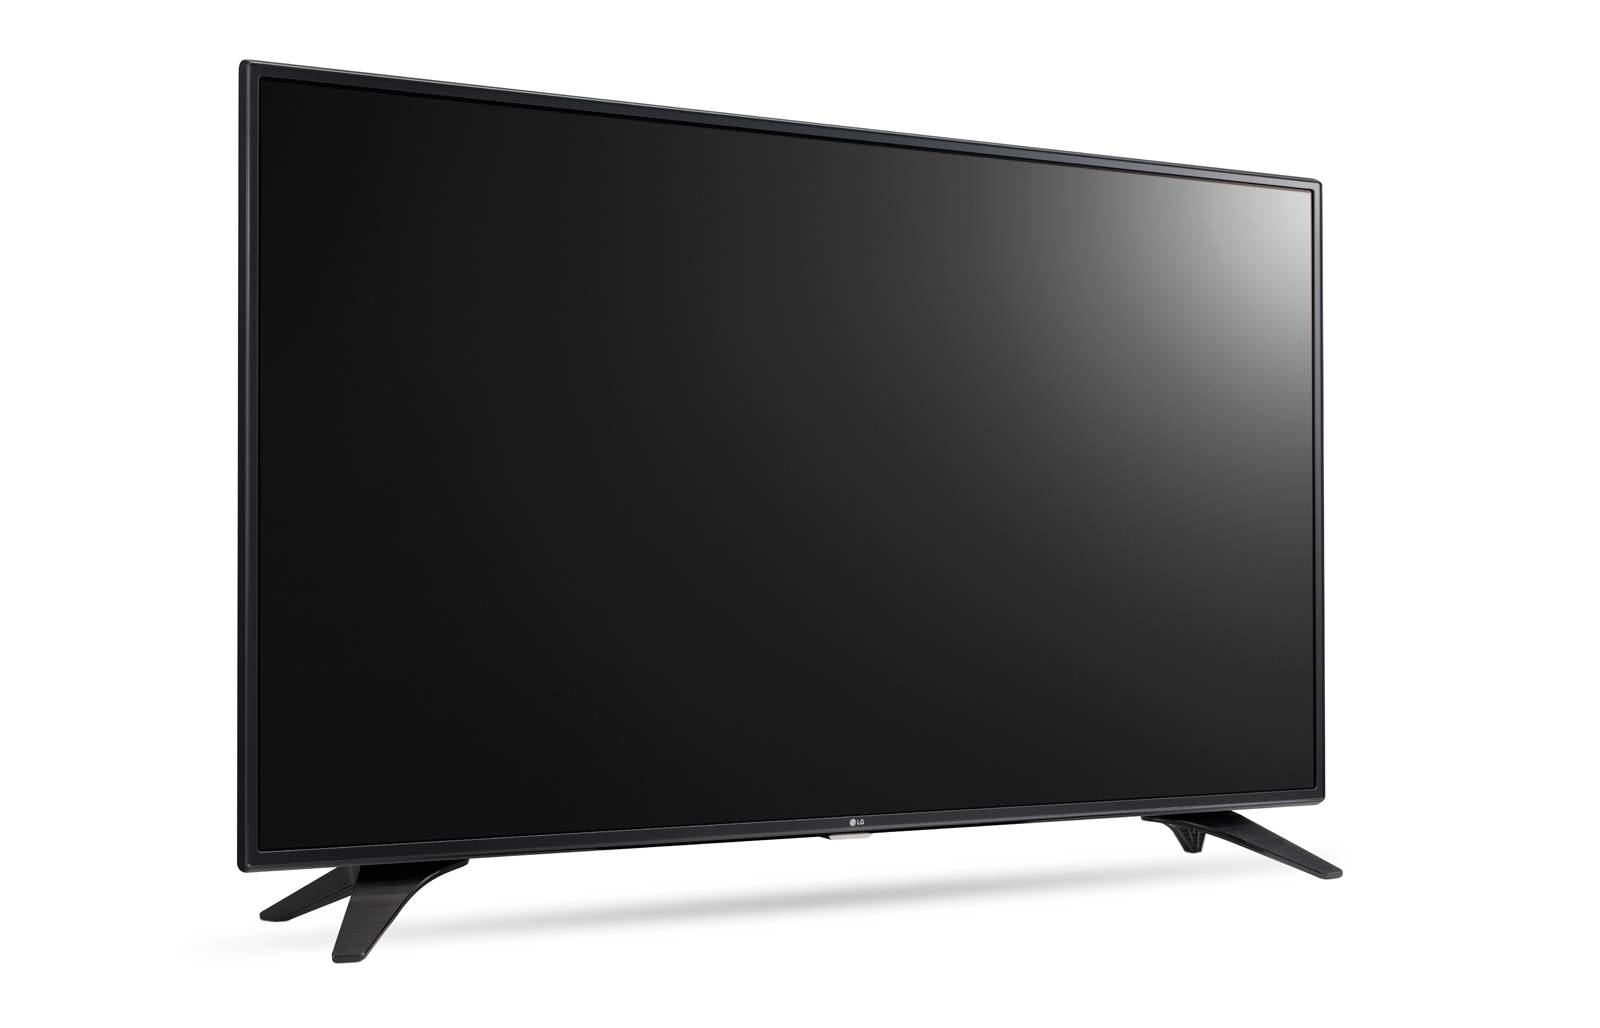 Коммерческий телевизор LG 49LW540S